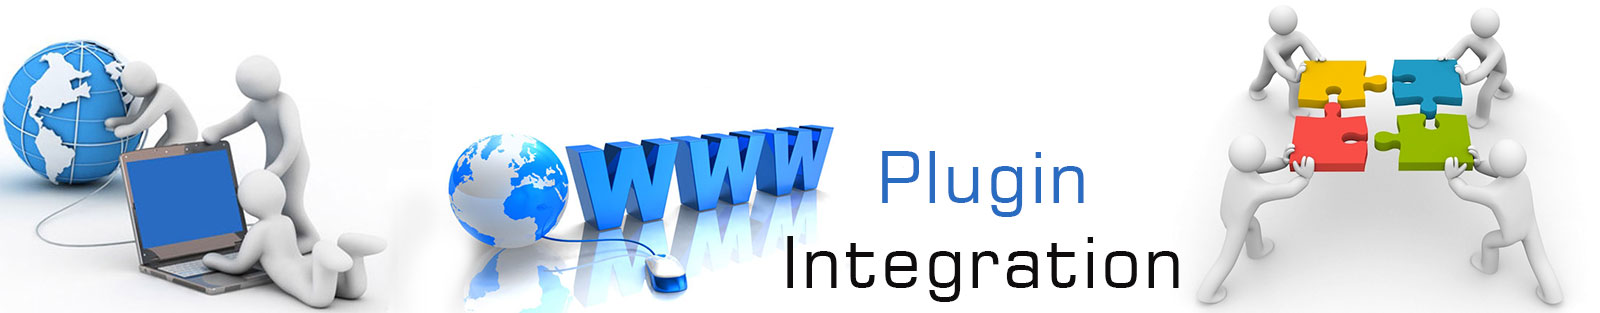 Plugin Integration Services